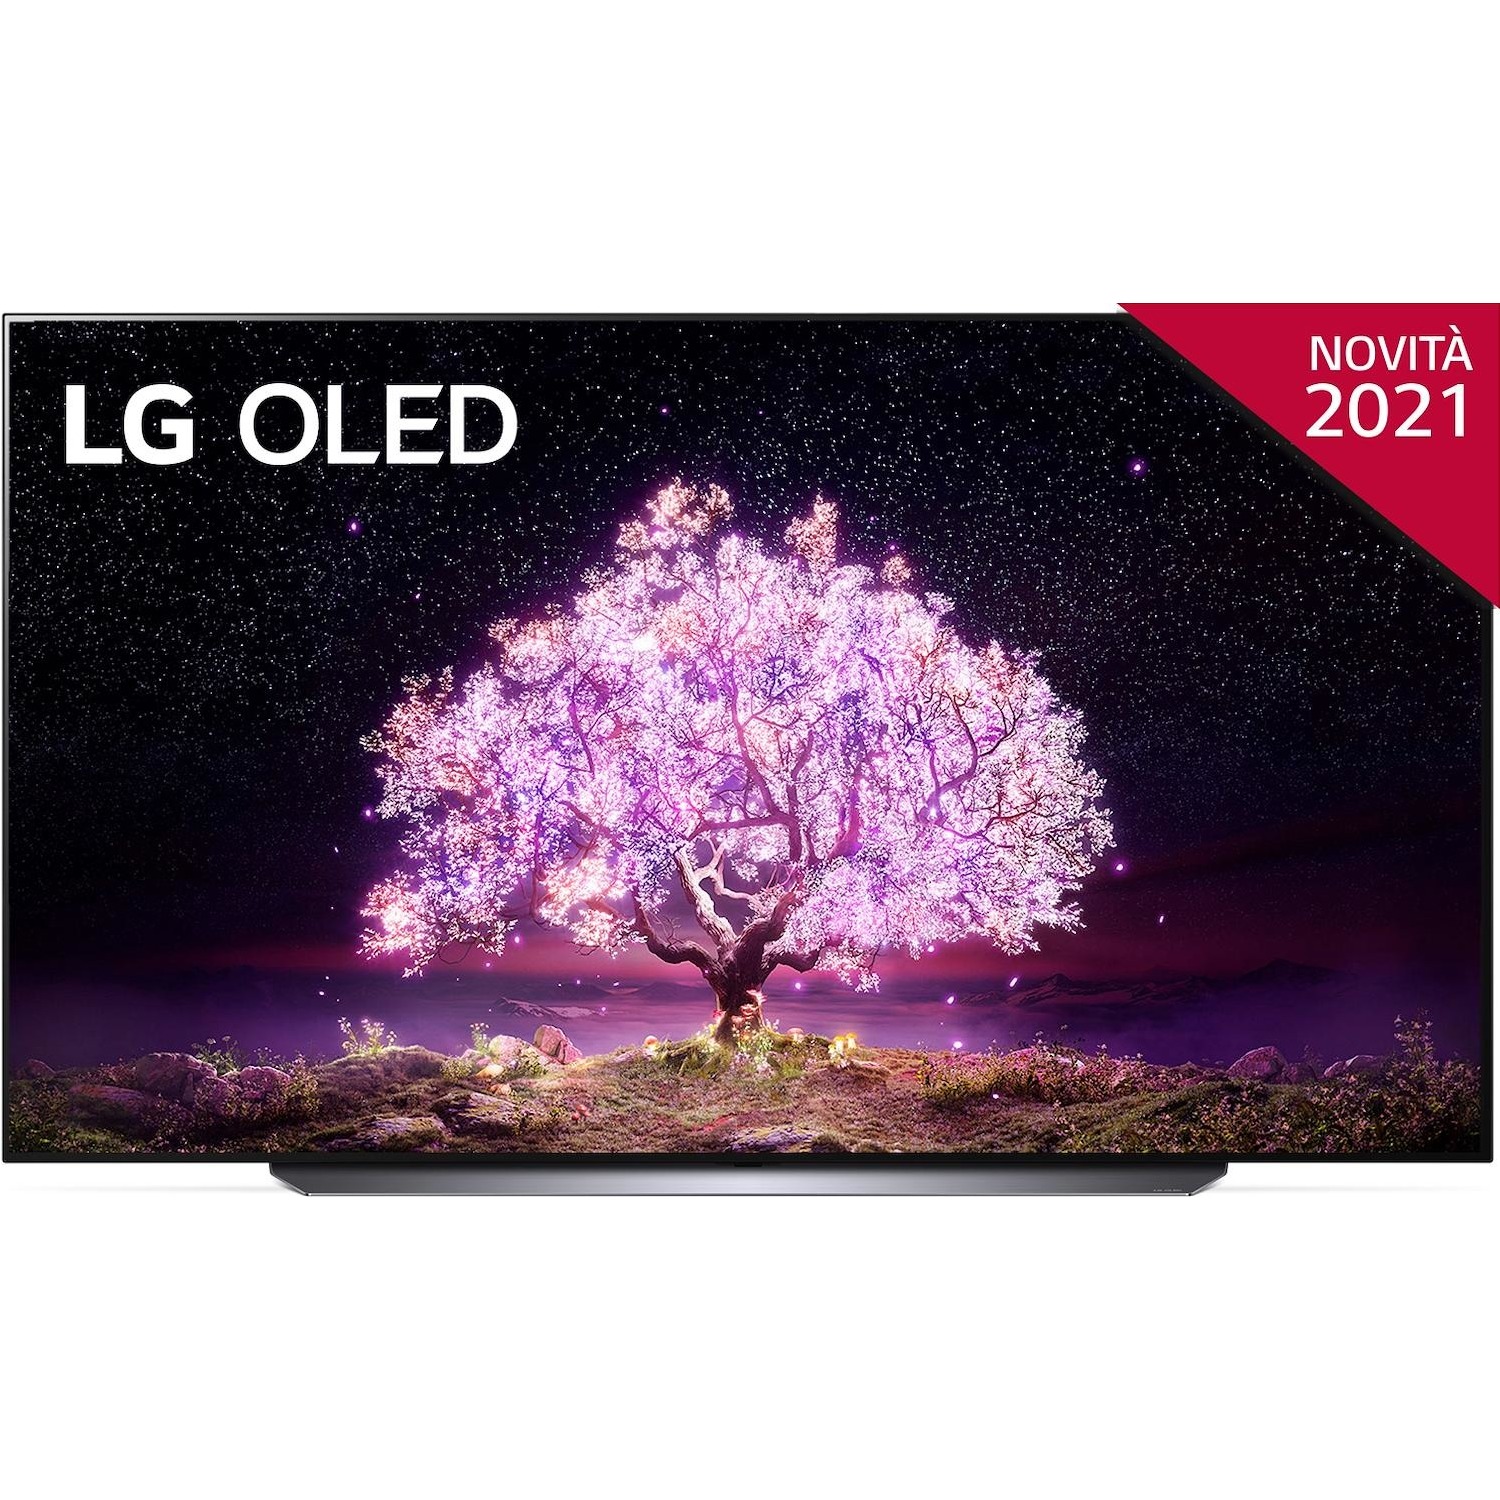 Immagine per TV OLED UHD 4K Smart LG OLED83C14 da DIMOStore